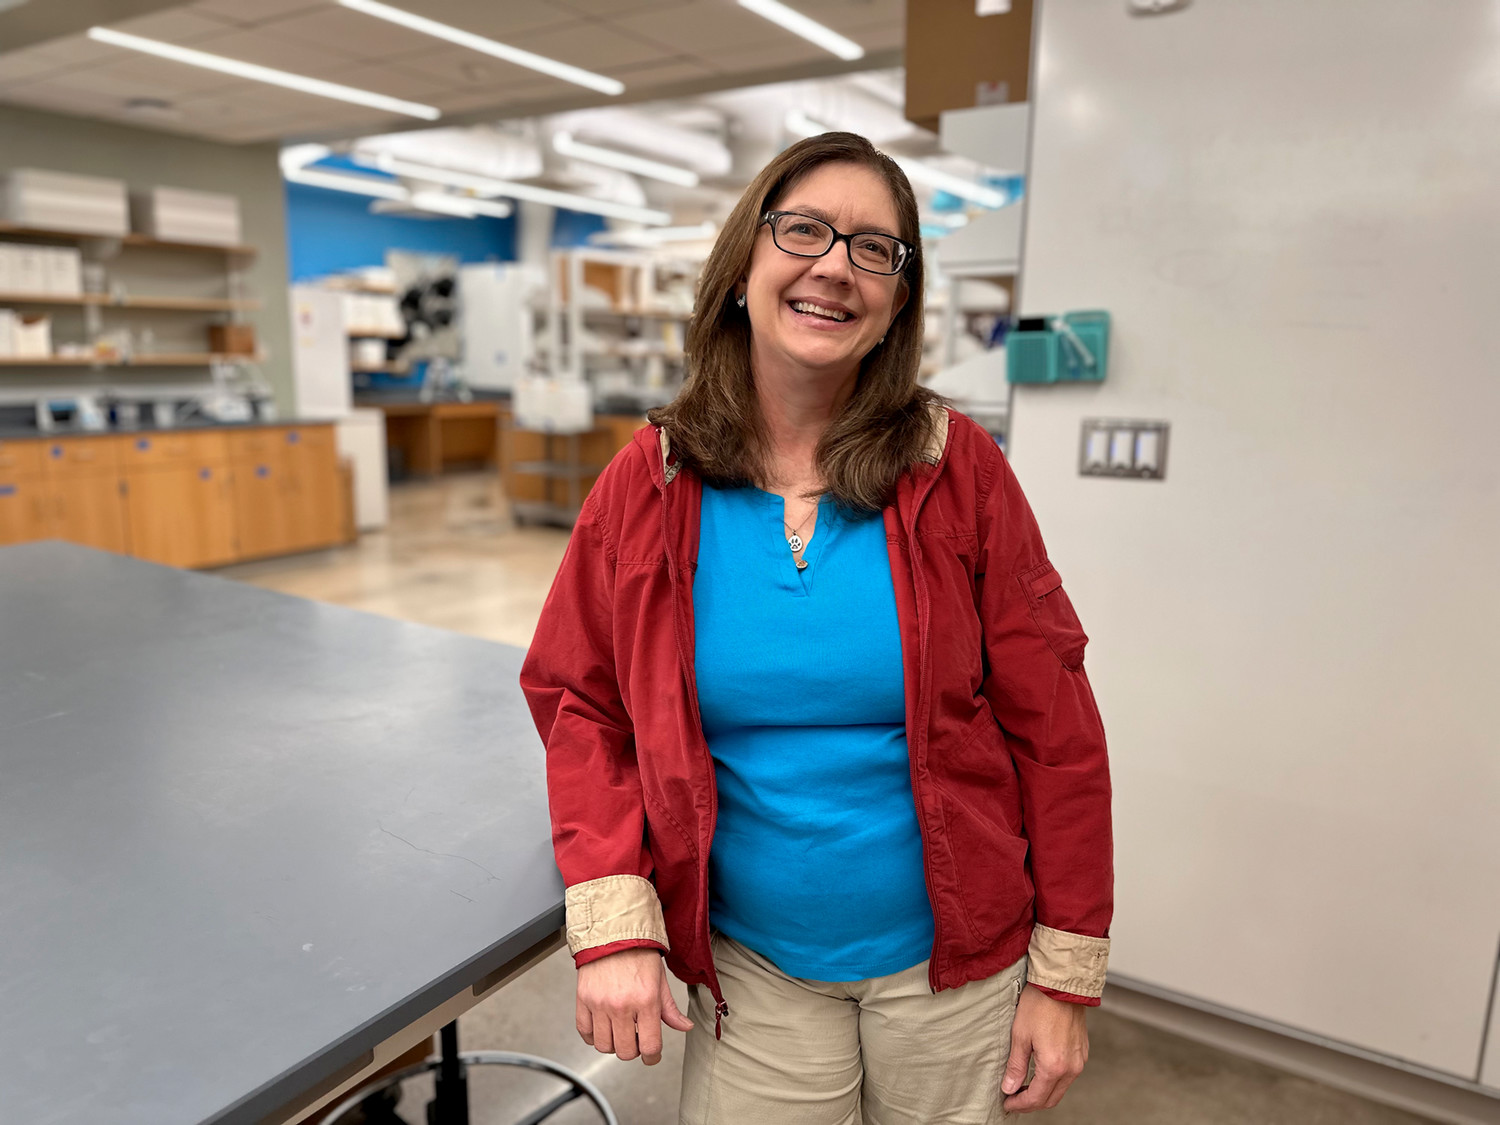 Alumni Spotlight: Beth Beason-Abmayr receives first endowed chair for teaching at Rice University